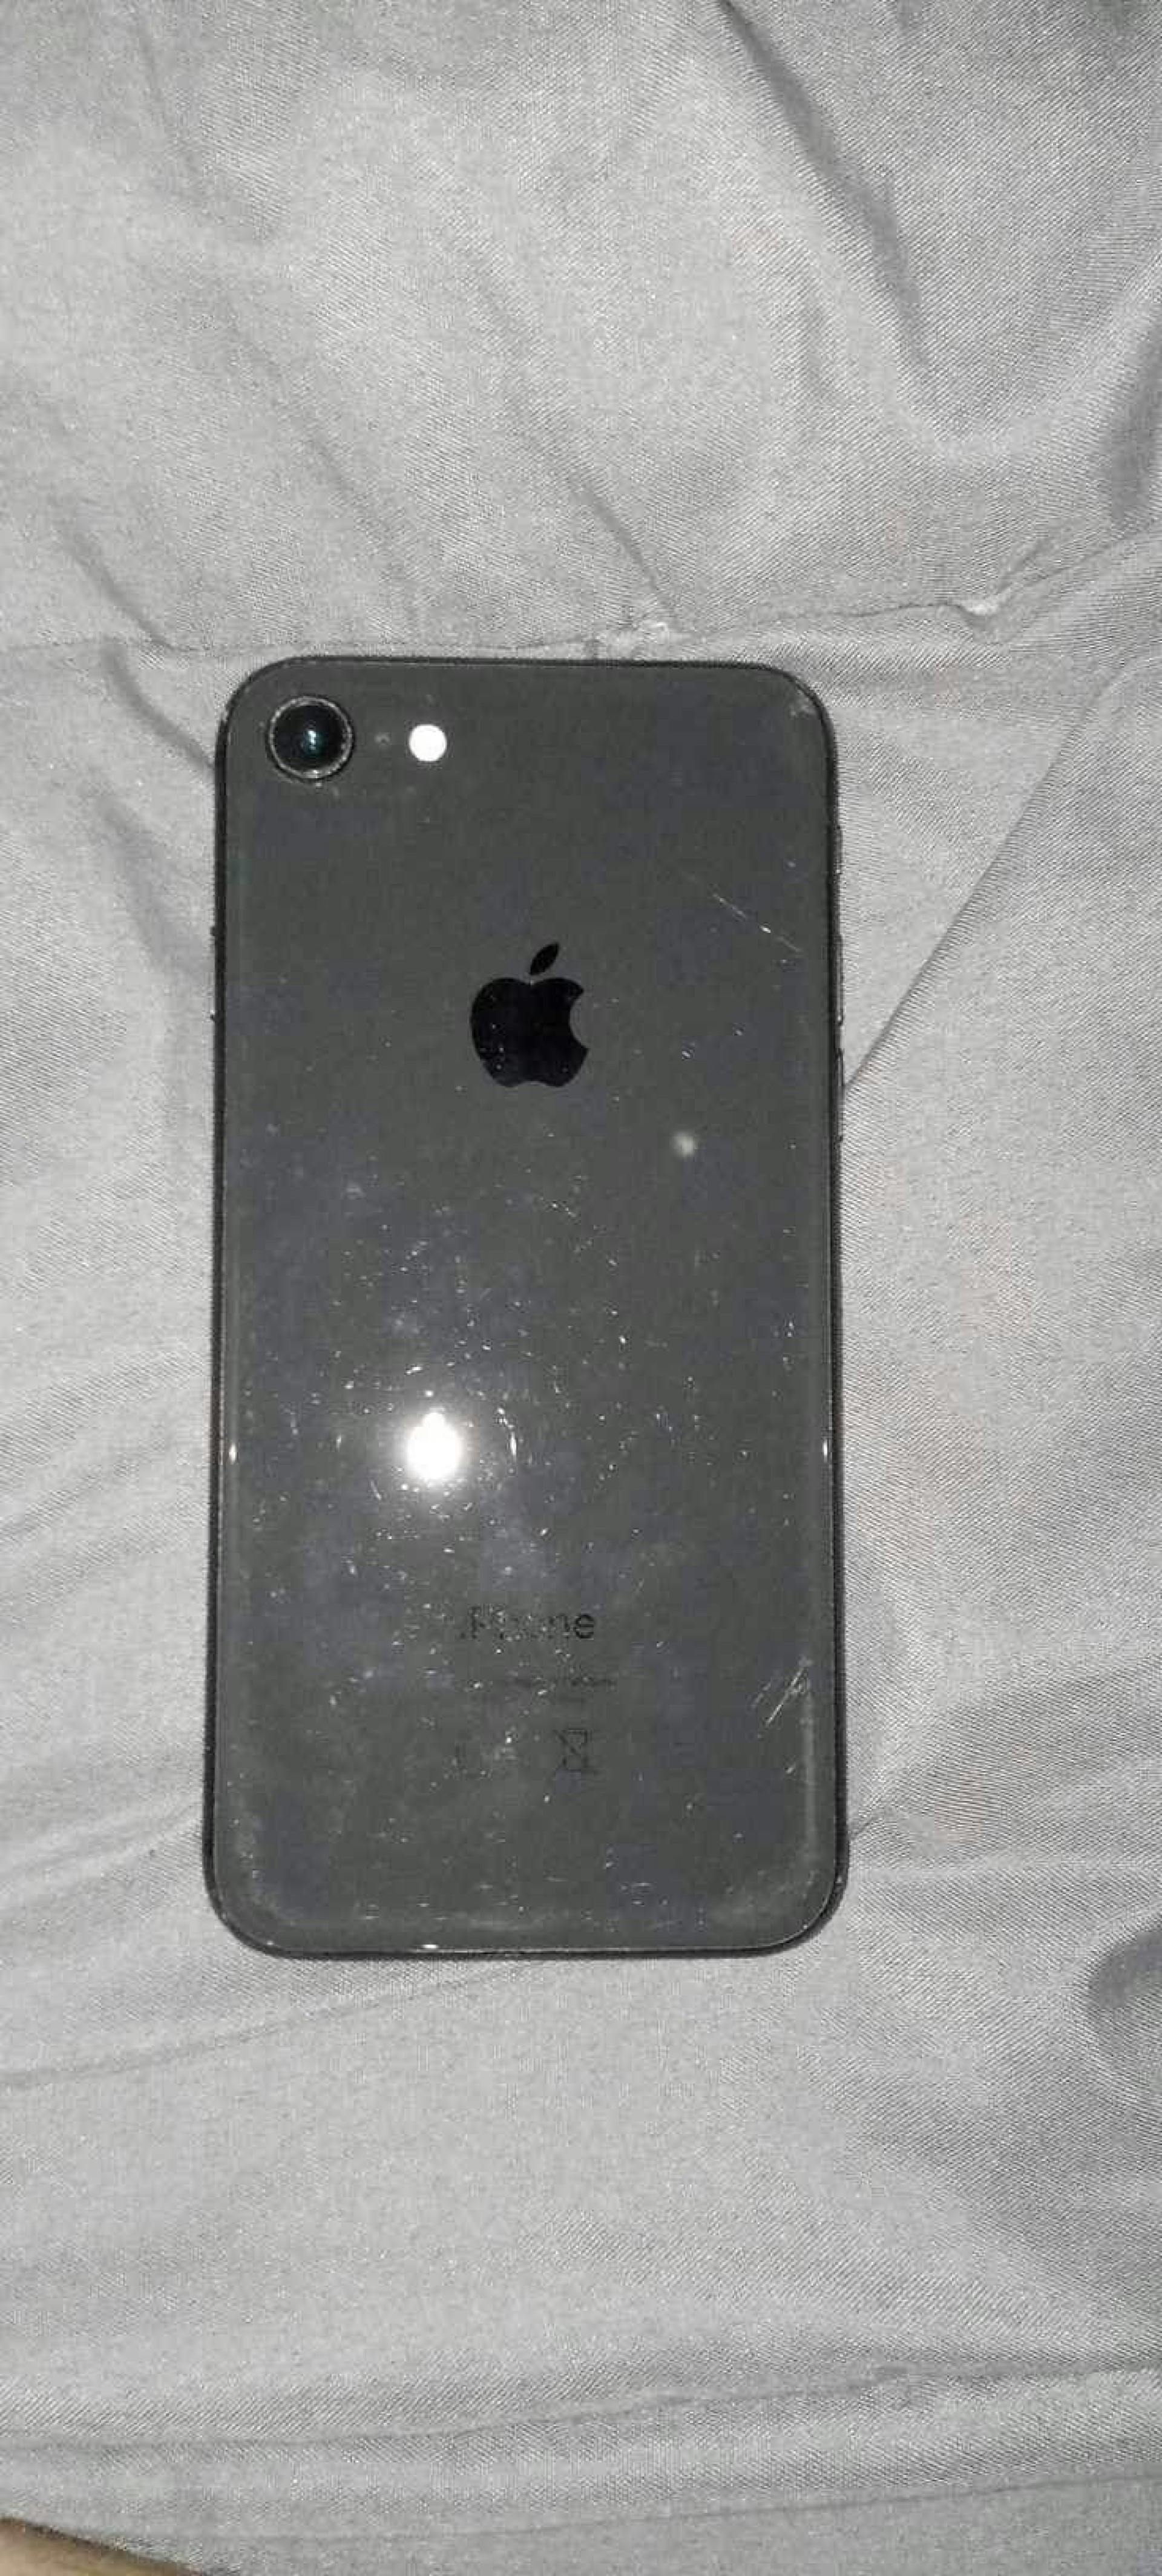 Apple iPhone 8 64GB Space Gray